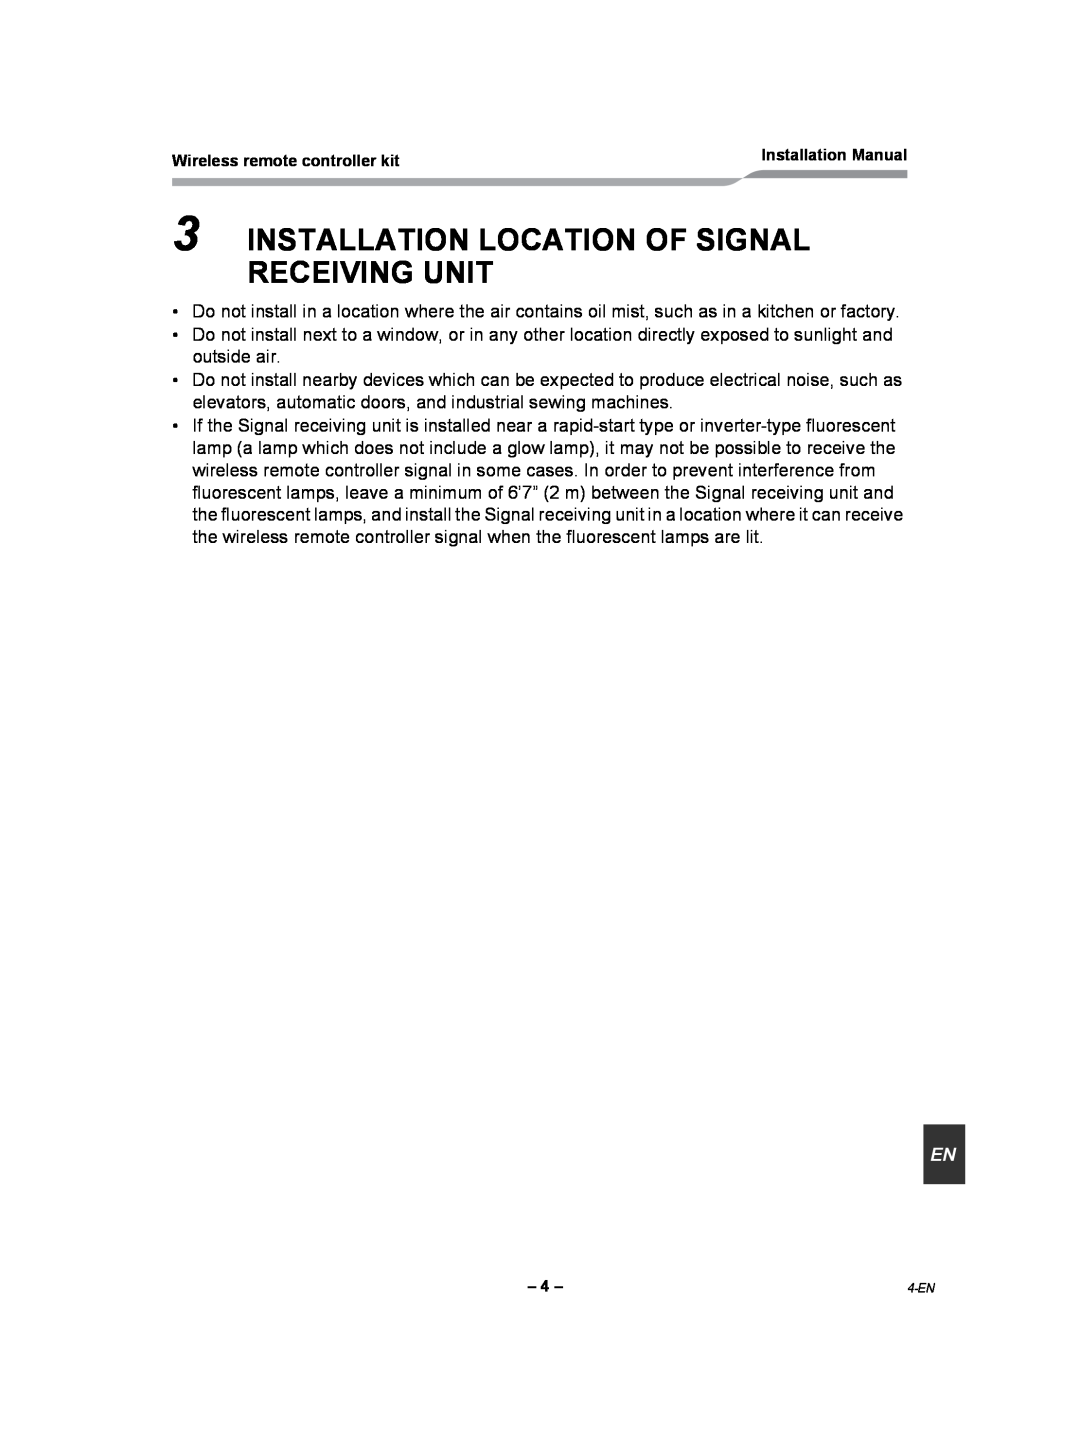 Toshiba TCB-AX21UL installation manual Installation Location Of Signal Receiving Unit 